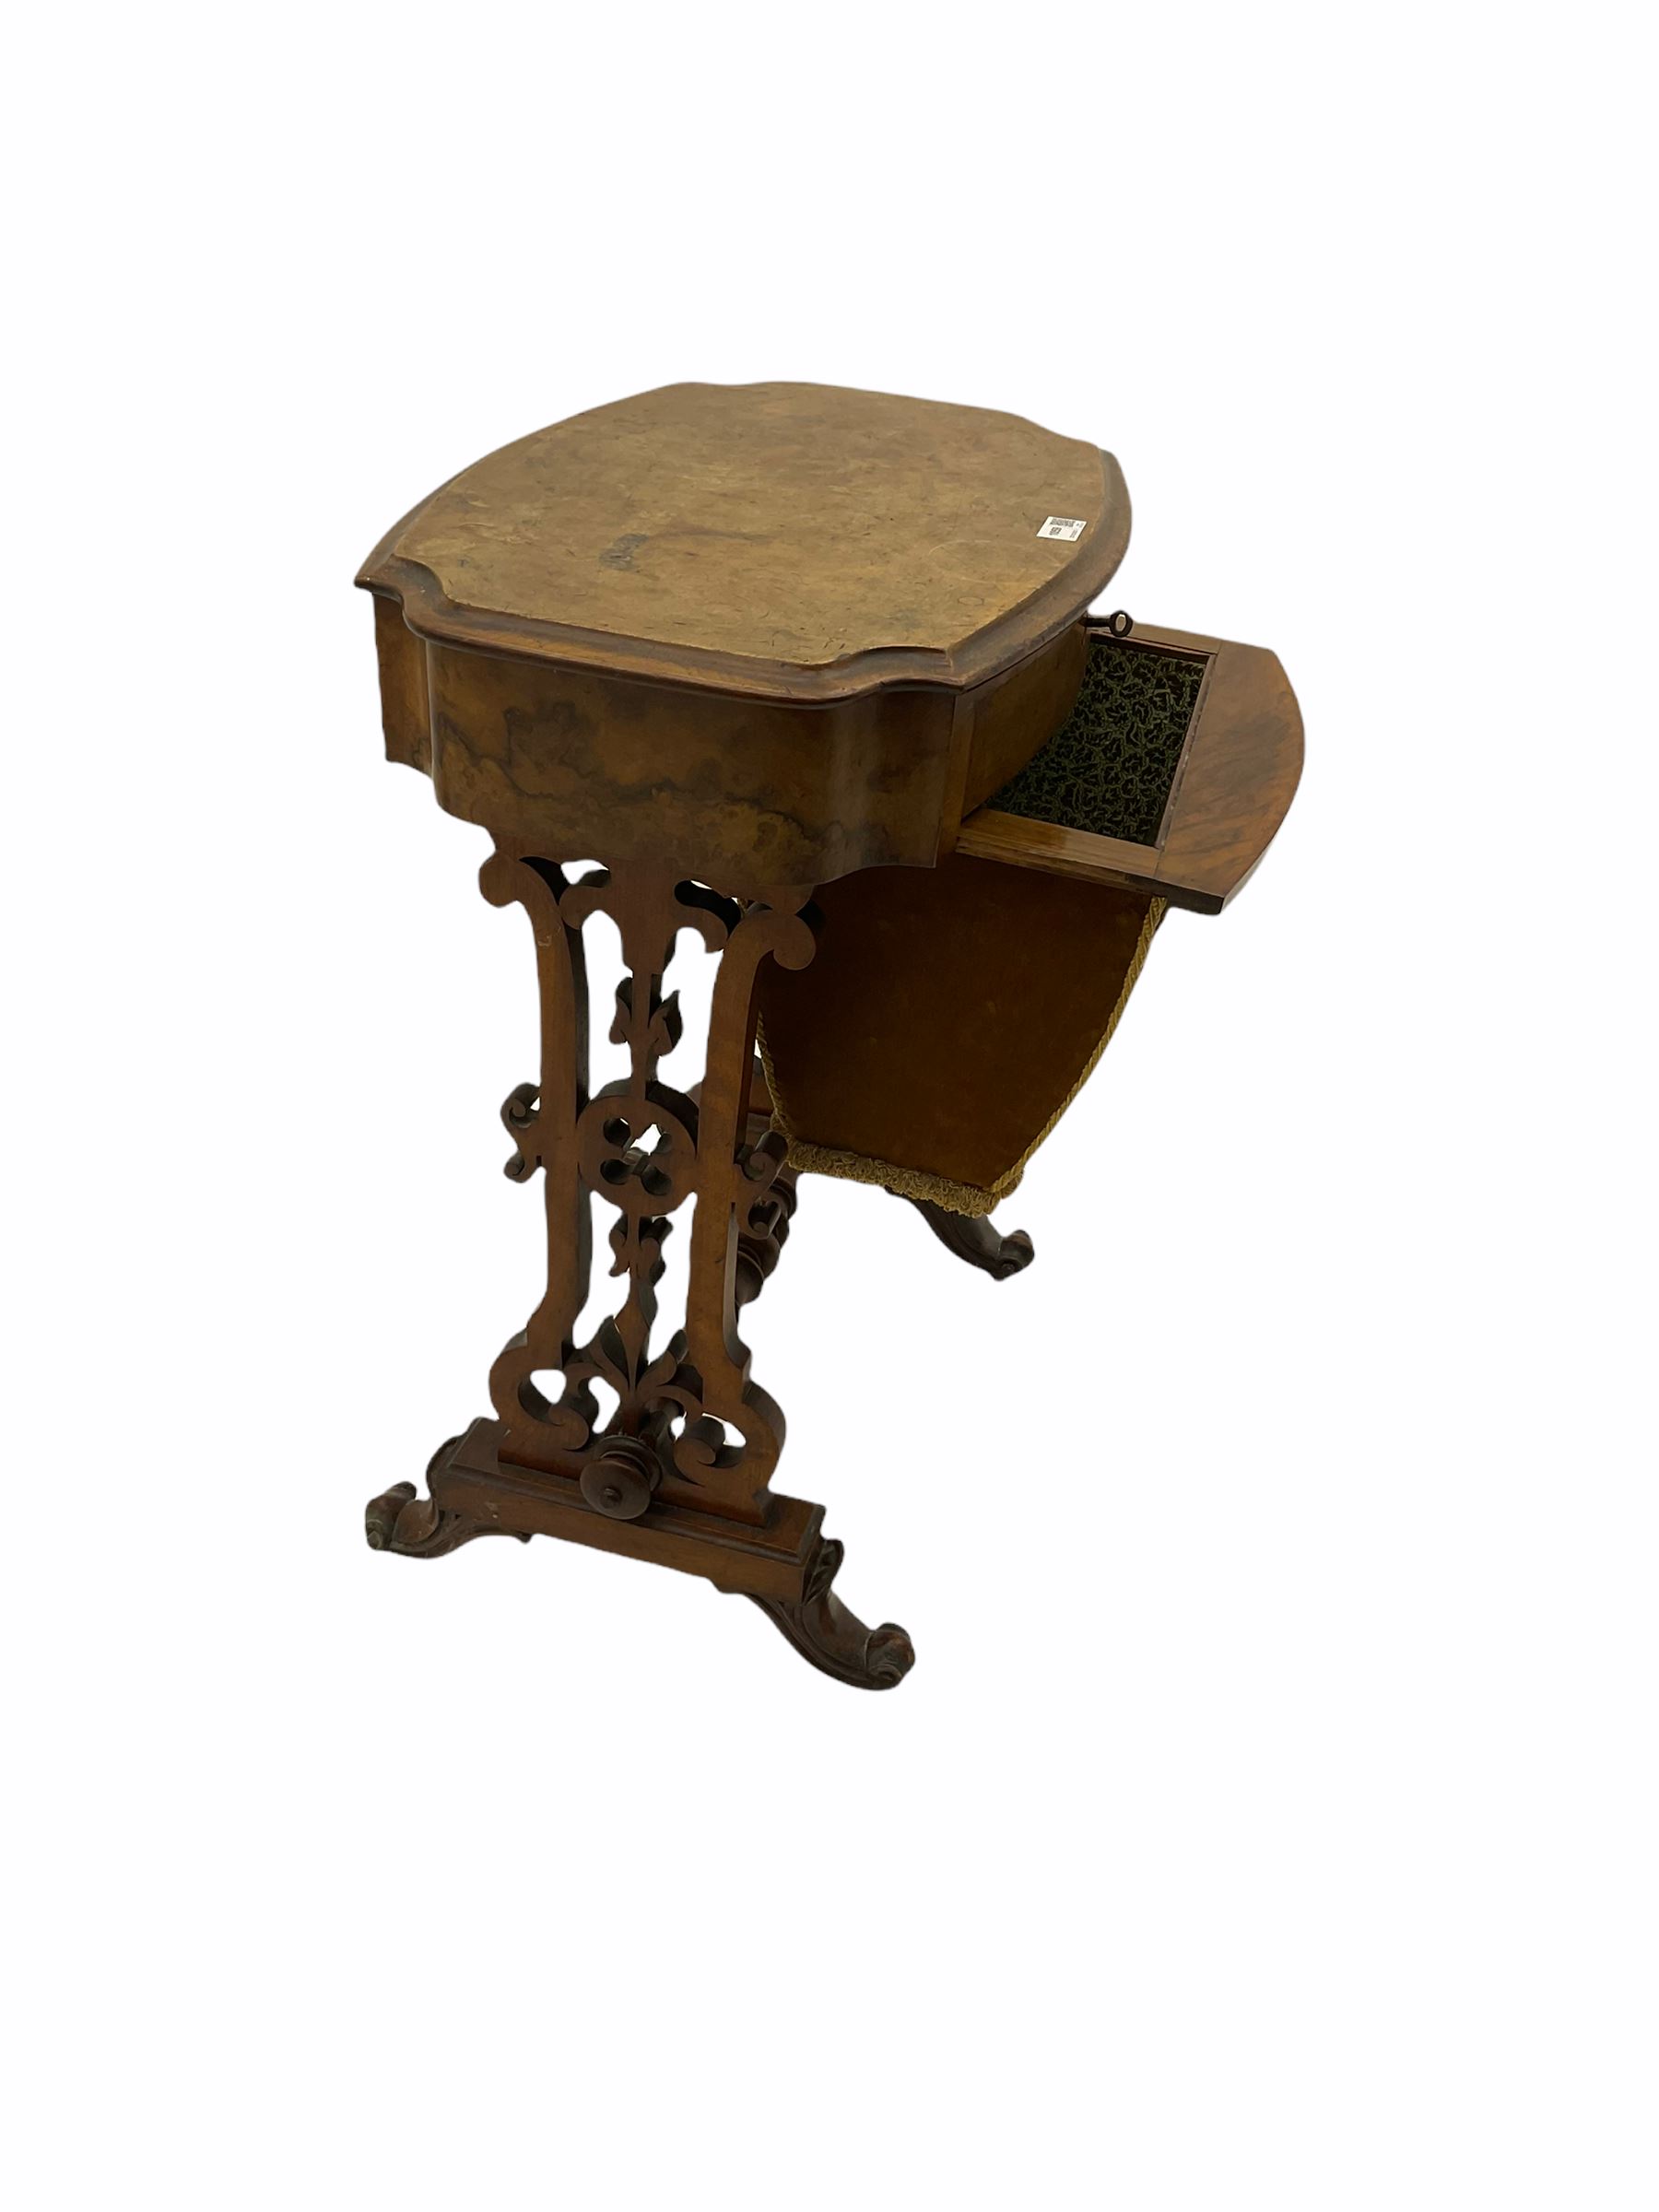 Victorian figured walnut work table - Image 5 of 5